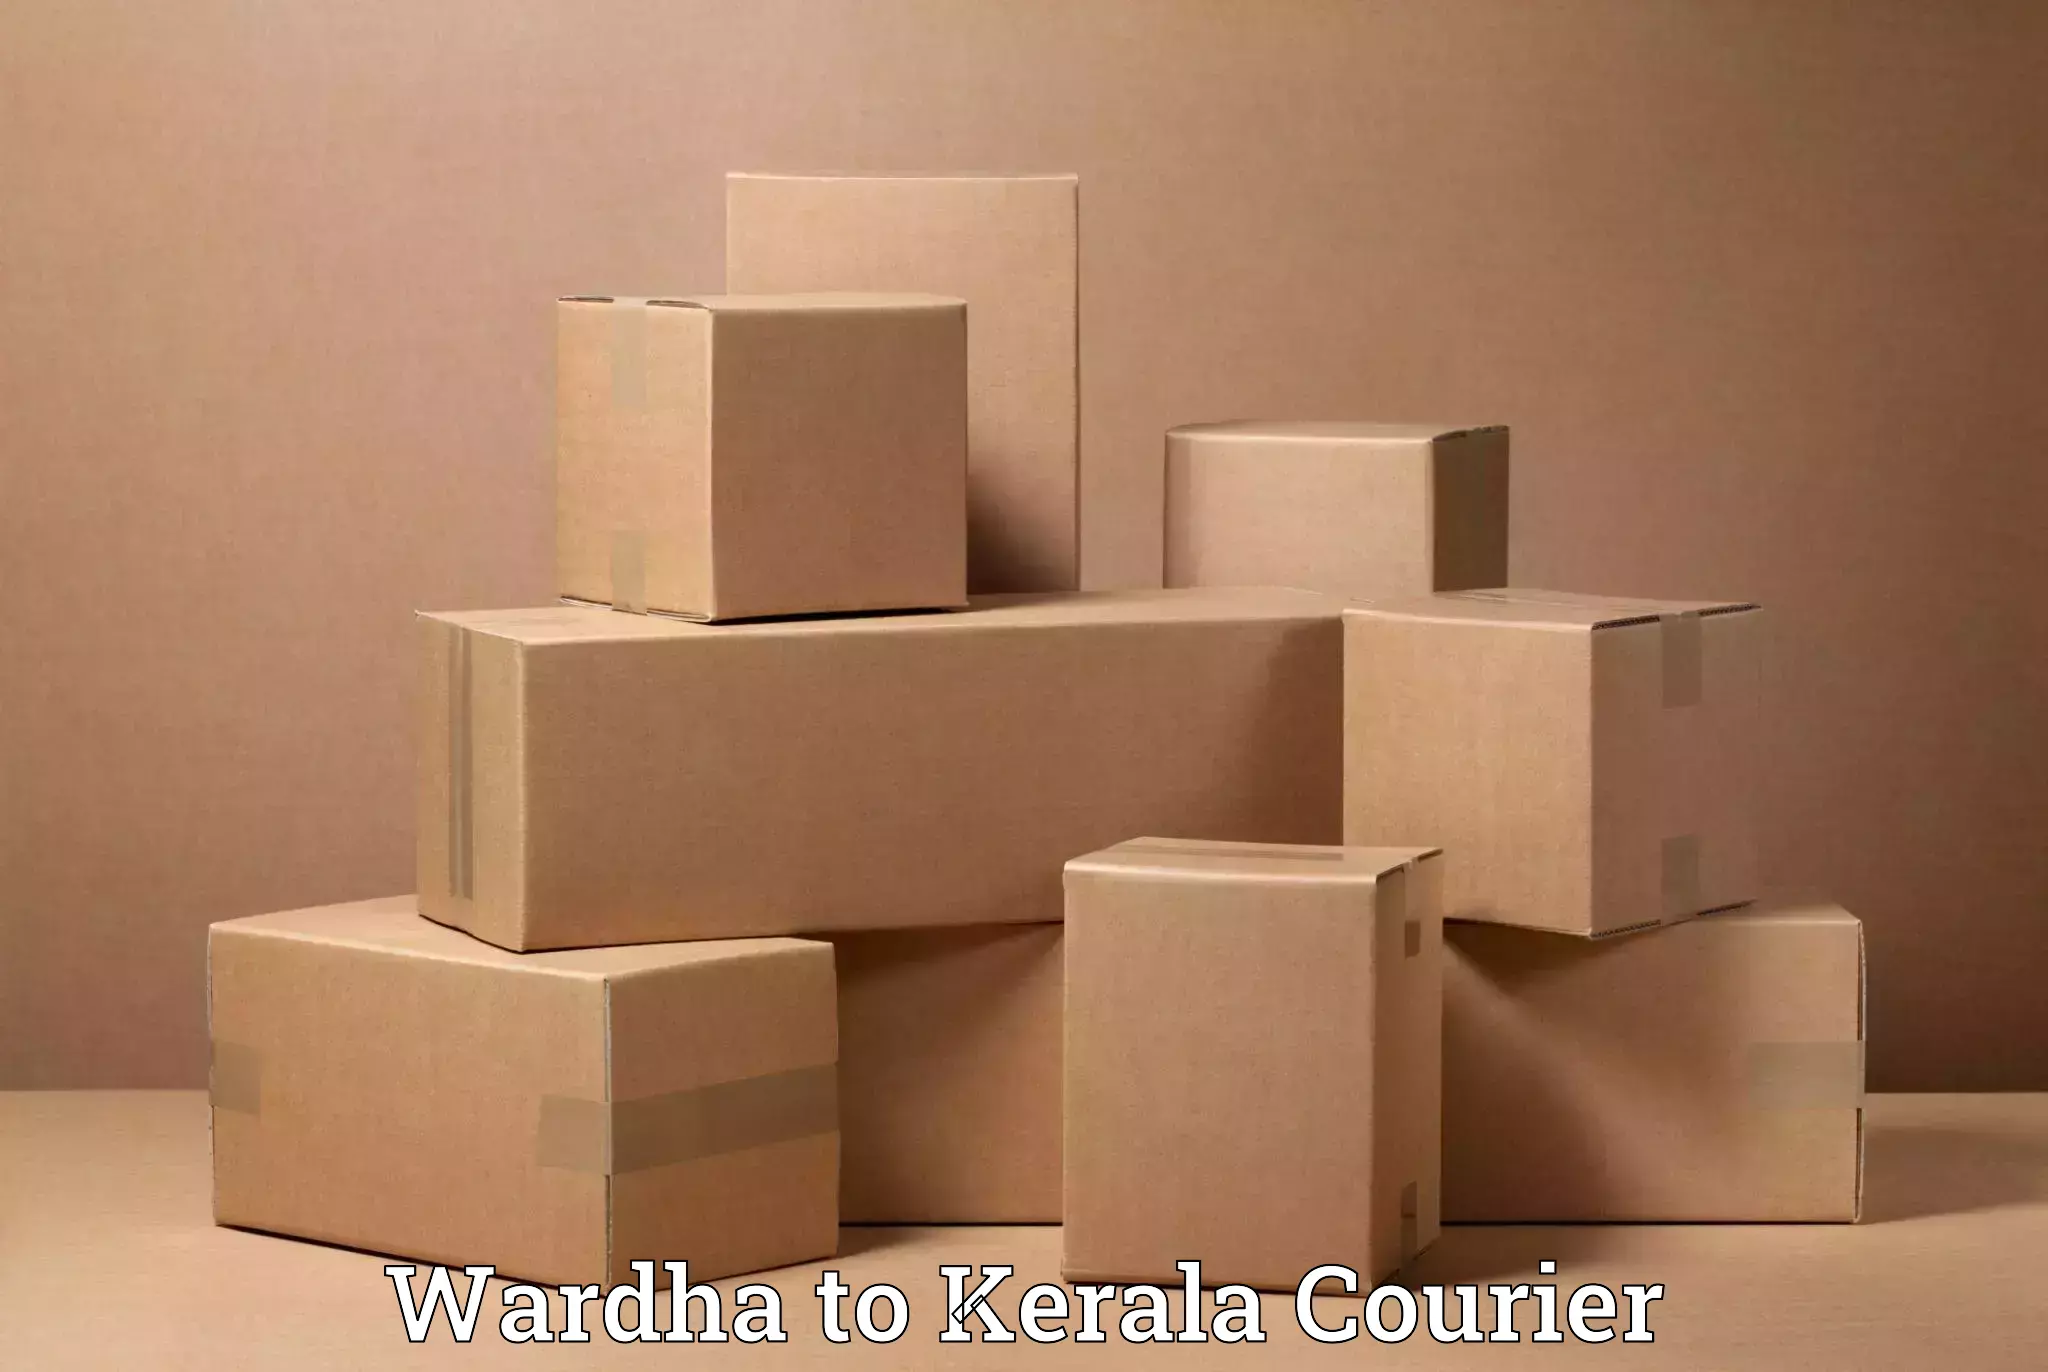 Professional moving company Wardha to Guruvayur